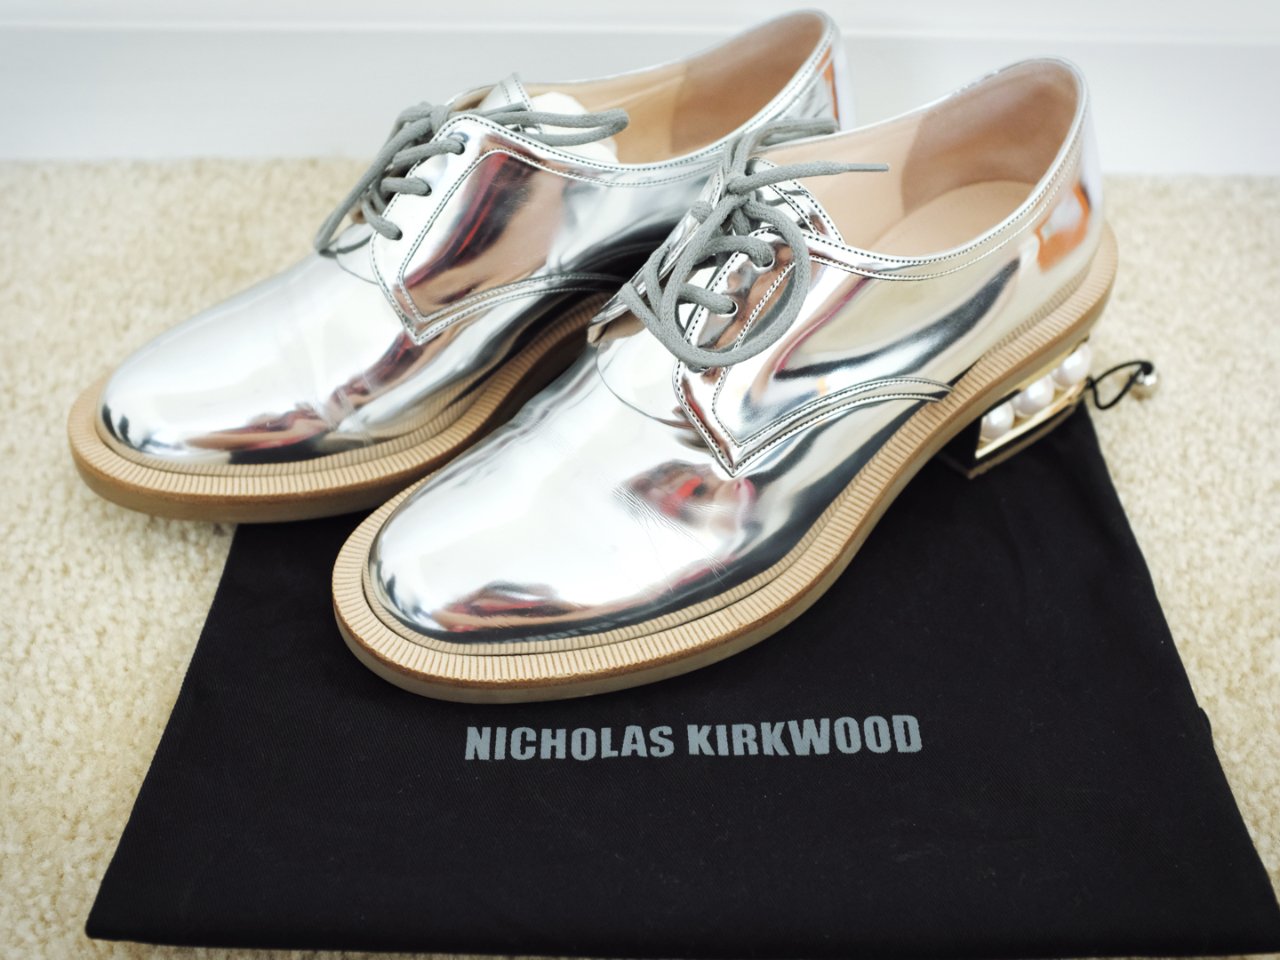 Nicholas Kirkwood 尼可拉斯·科克伍德,双十一战利品,牛津鞋